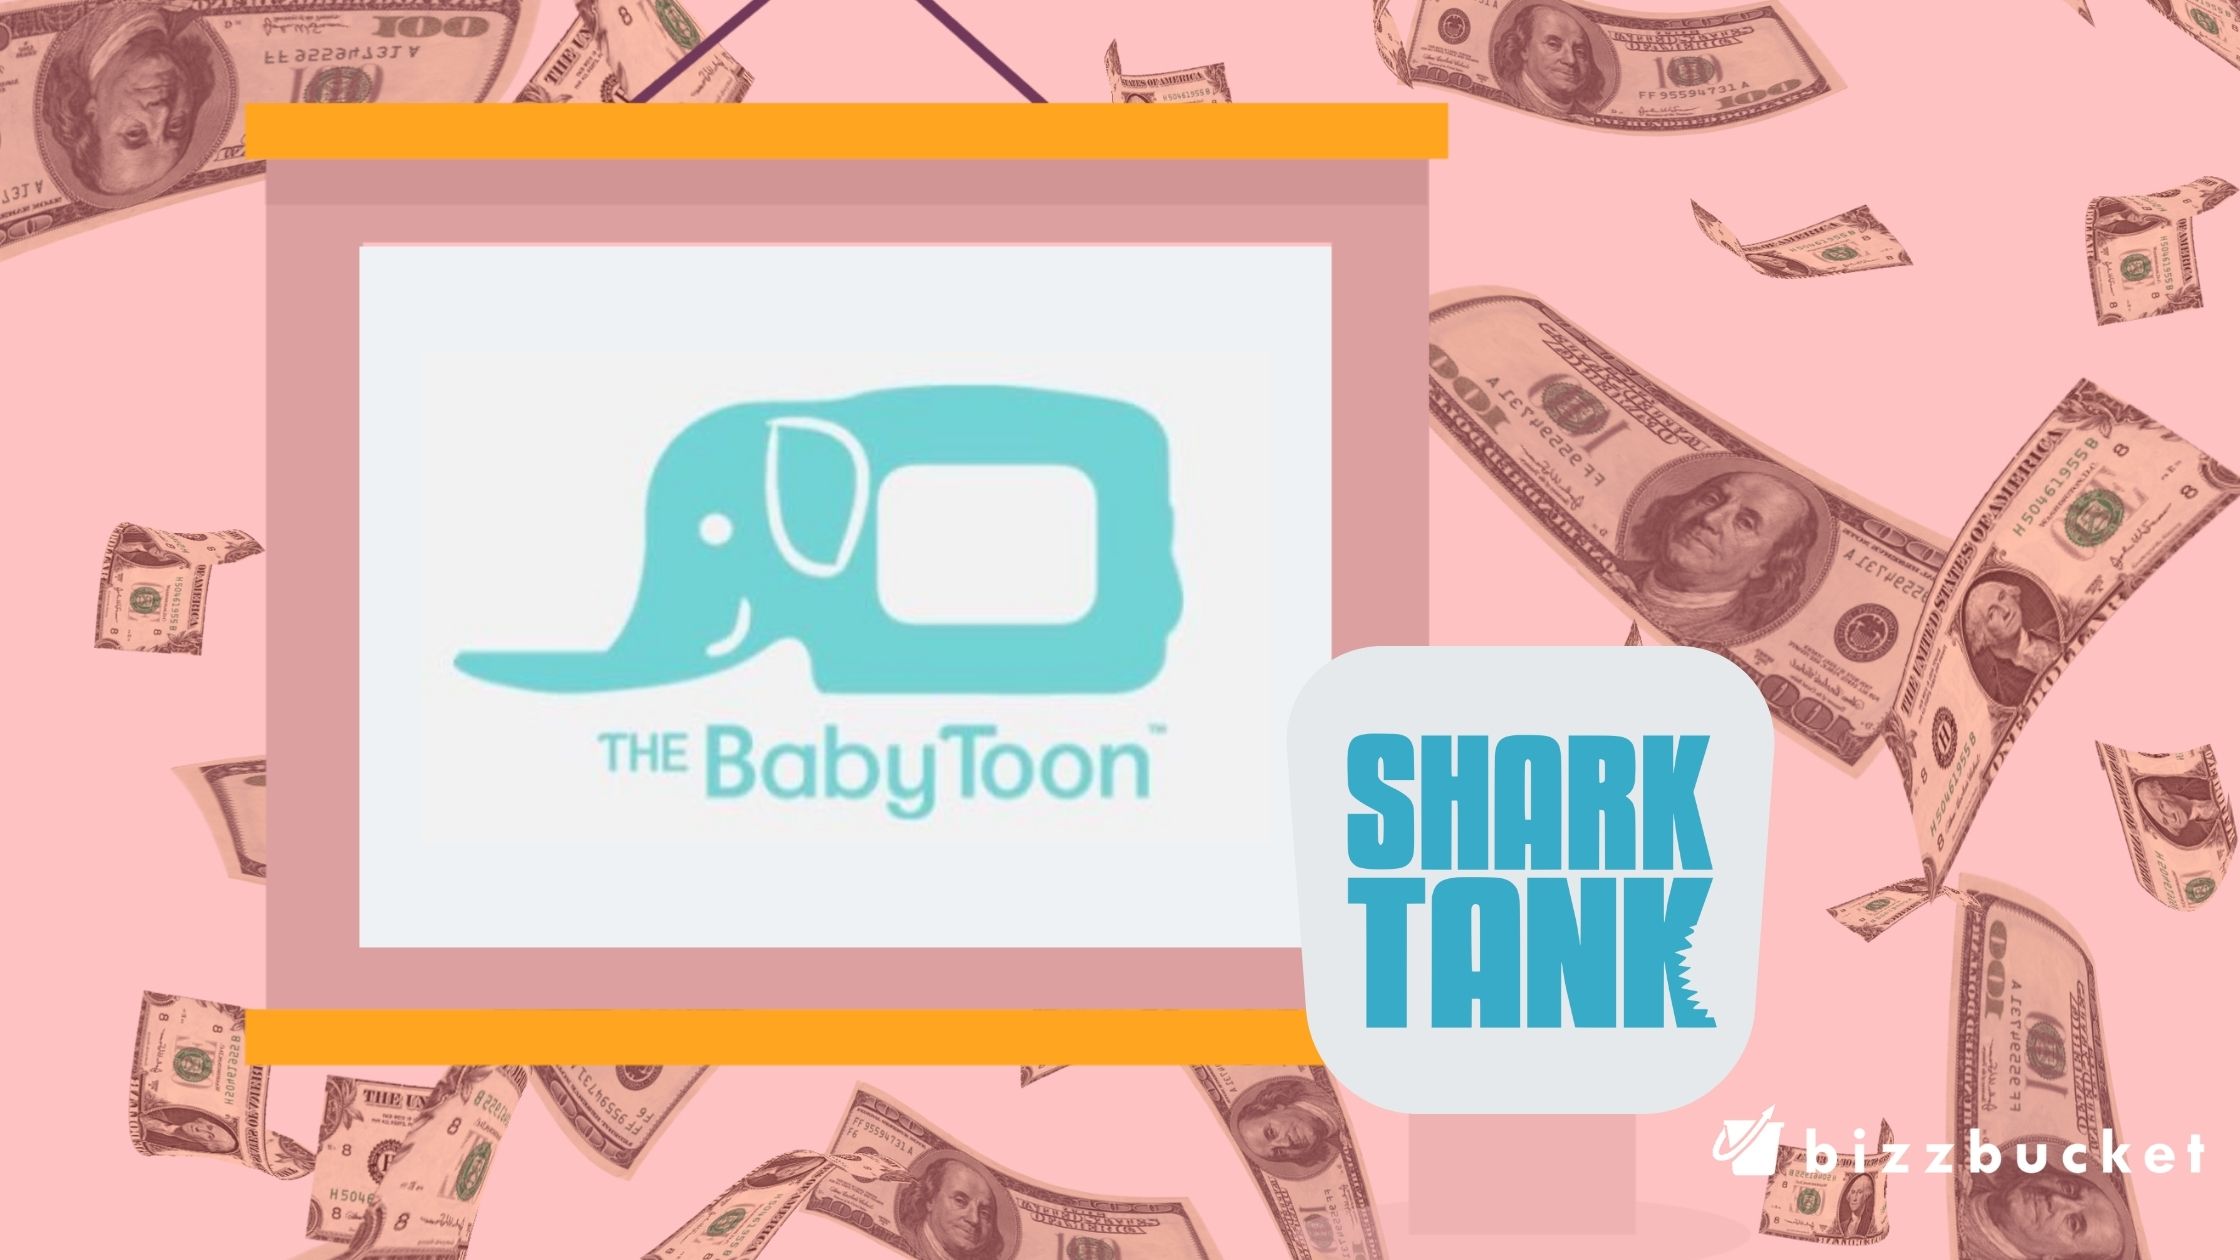 Baby Toon shark tank update